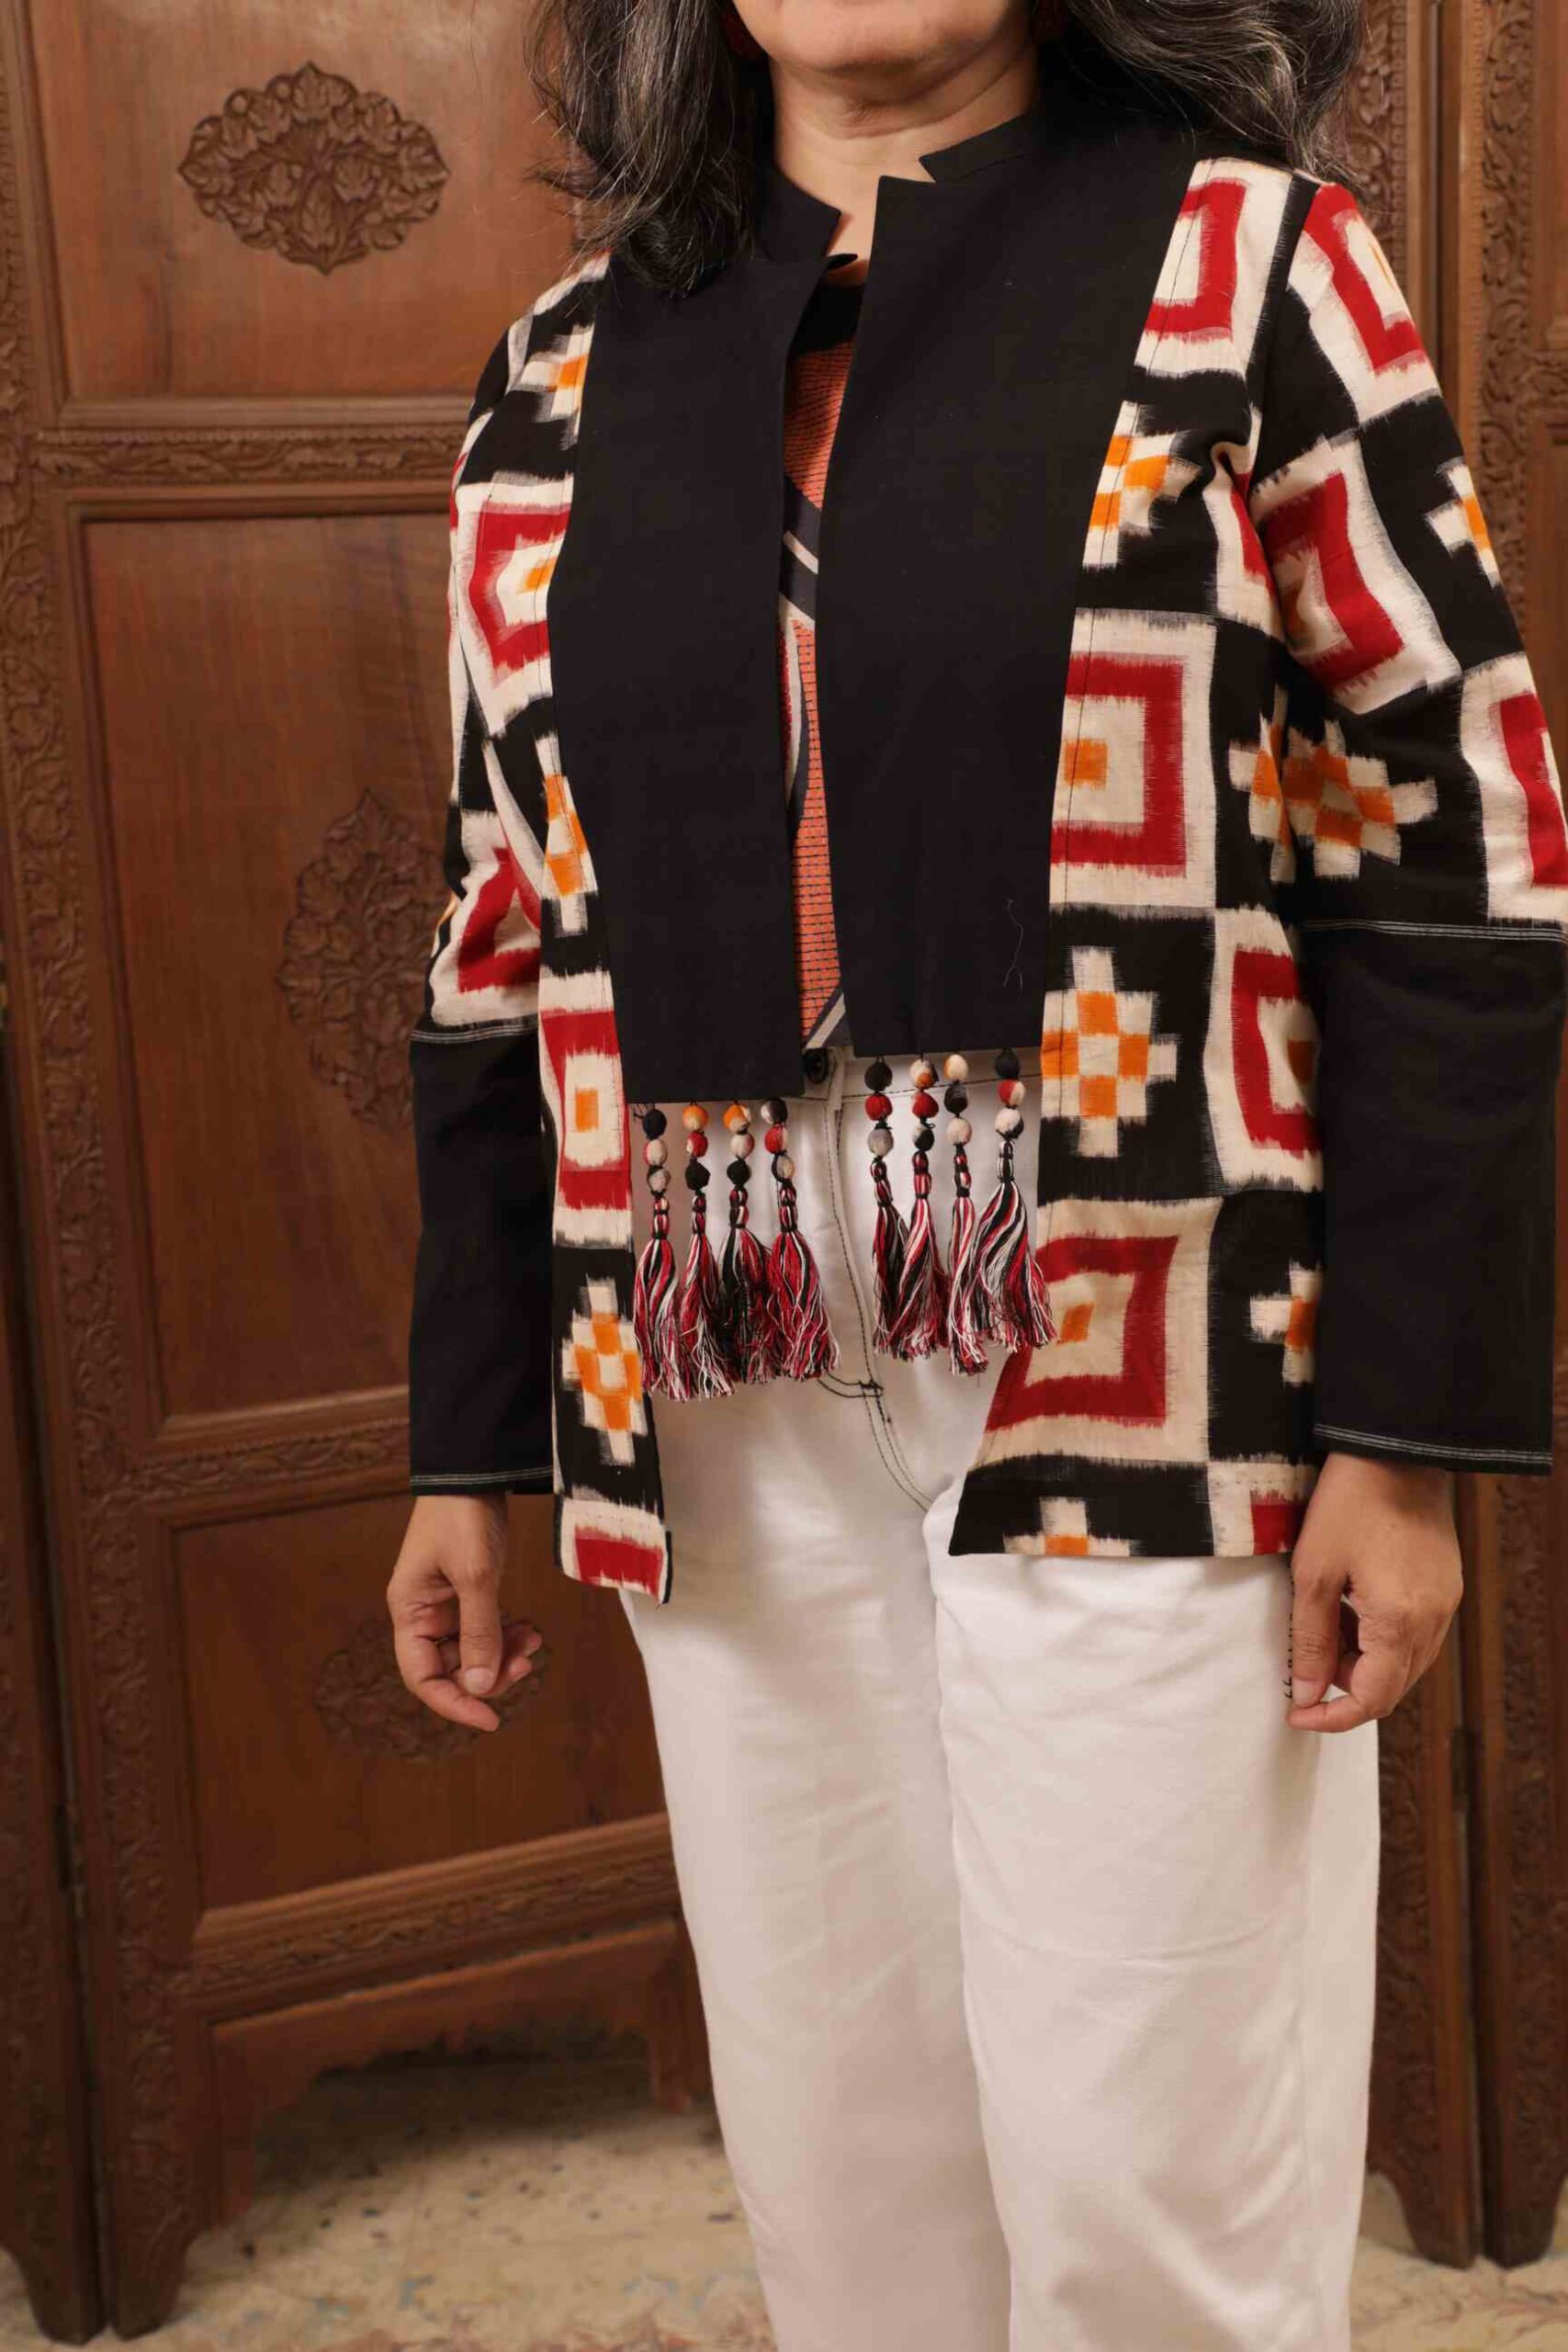 KAAMAHA Sleeveless Embroidered Women Jacket - Buy KAAMAHA Sleeveless  Embroidered Women Jacket Online at Best Prices in India | Flipkart.com